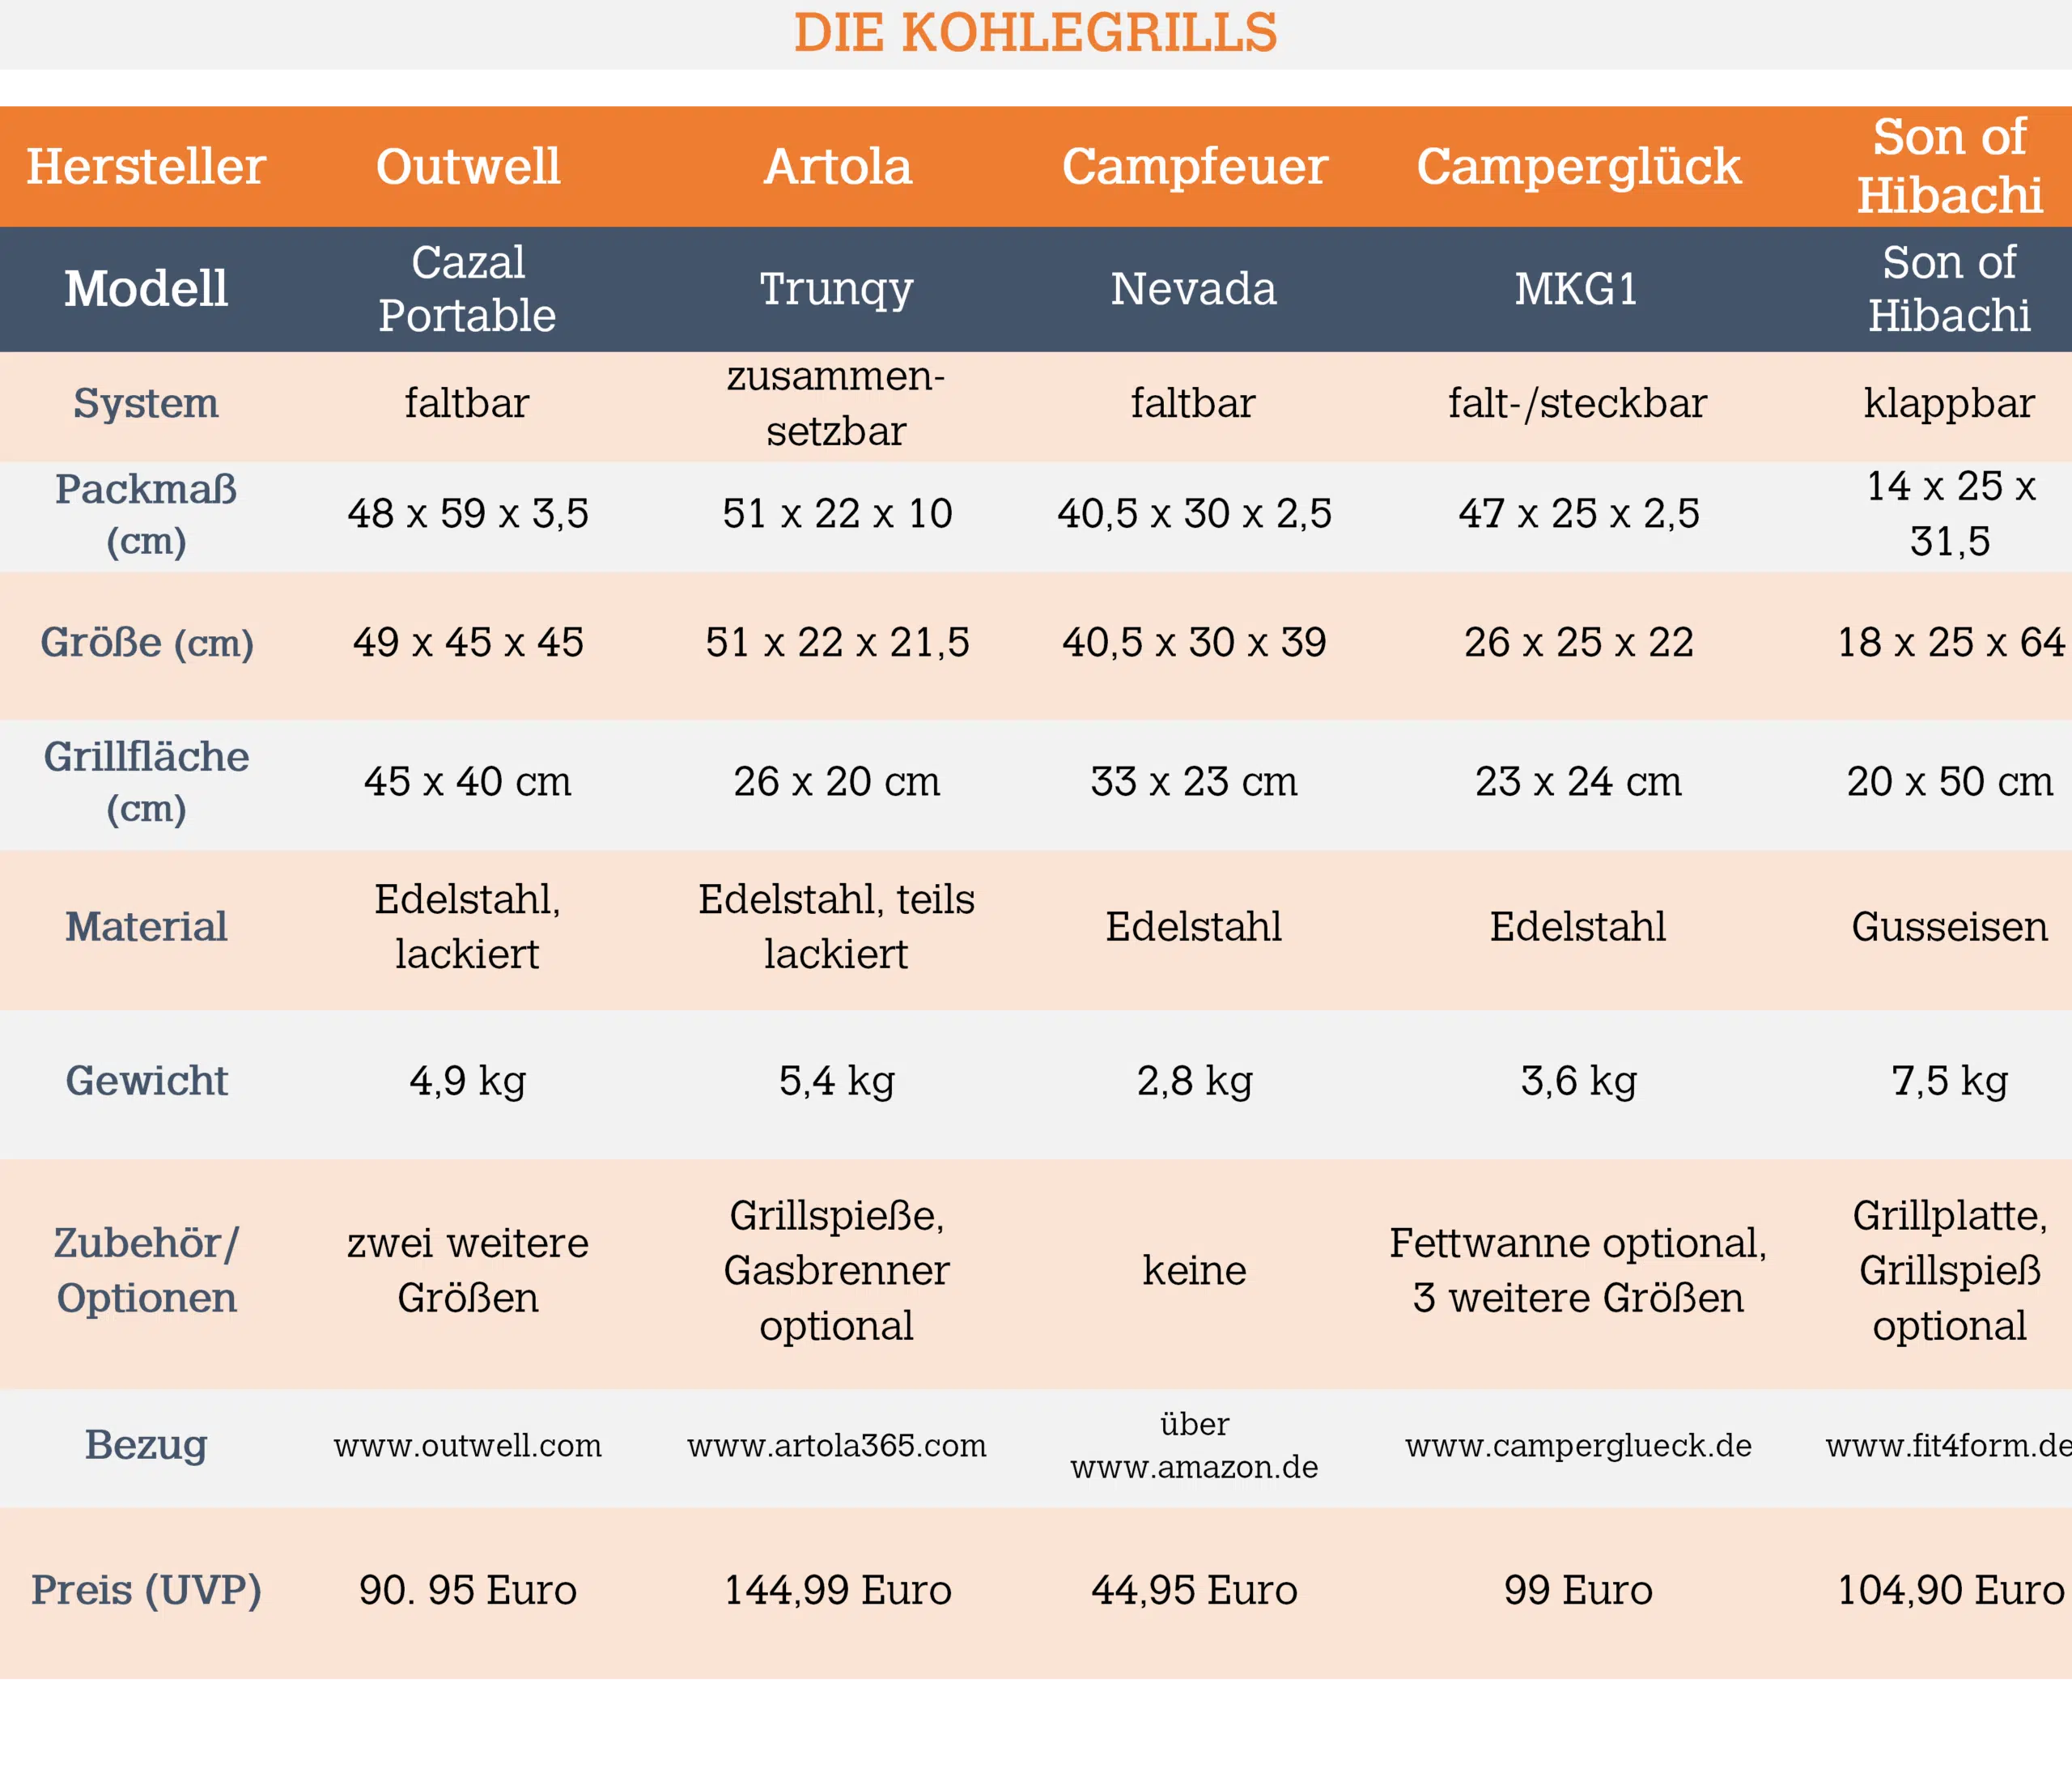 Mobile Holzkohlegrills: Grills Alle Fakten zu den getesteten Kohlegrills in der Tabelle